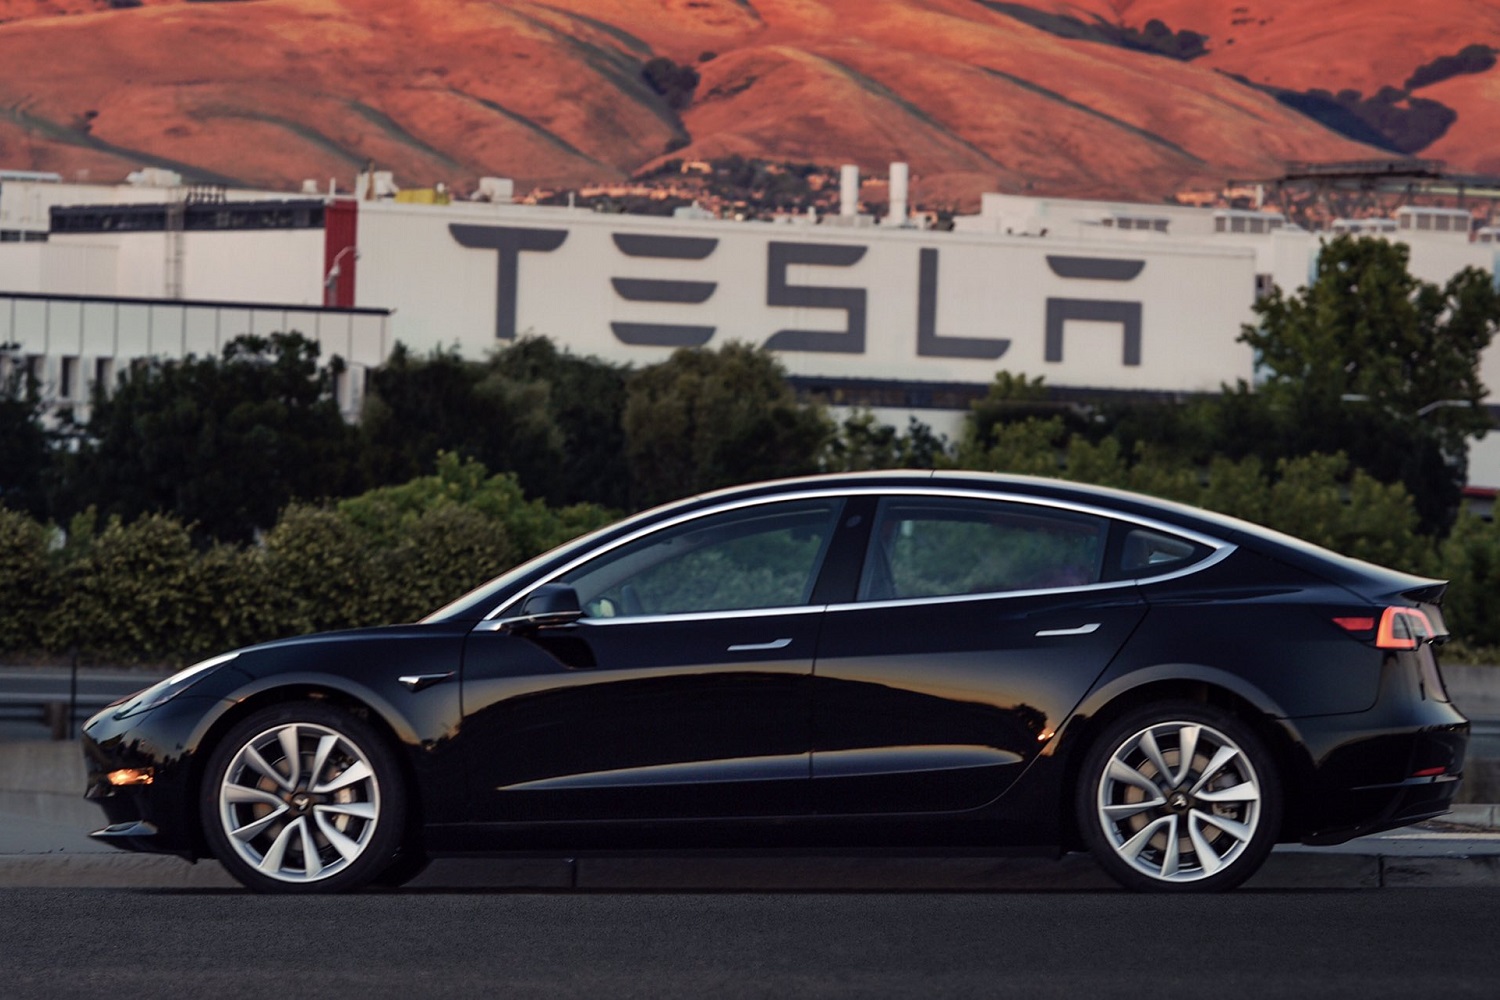 As CEO Musk Promised, Tesla Model 3 Deliveries Start in July